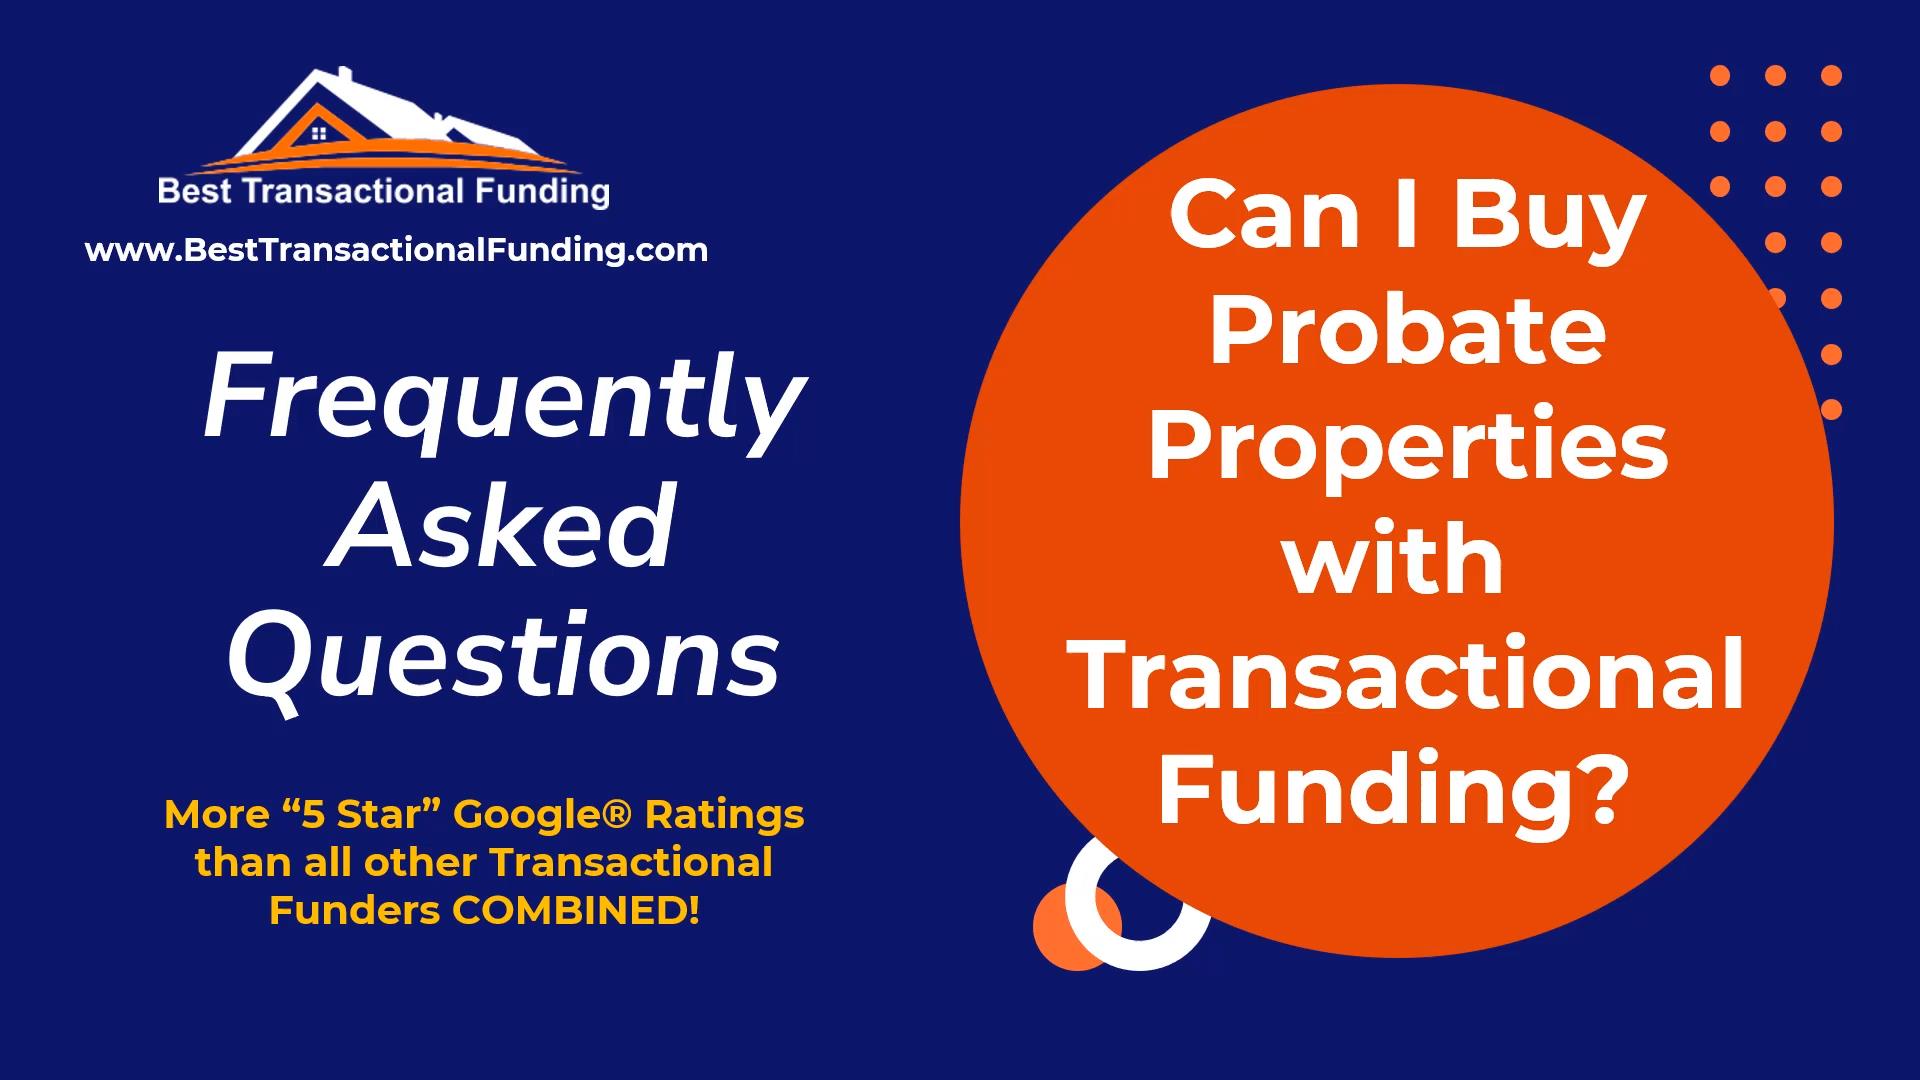 Buy Probates with Transactional Funding